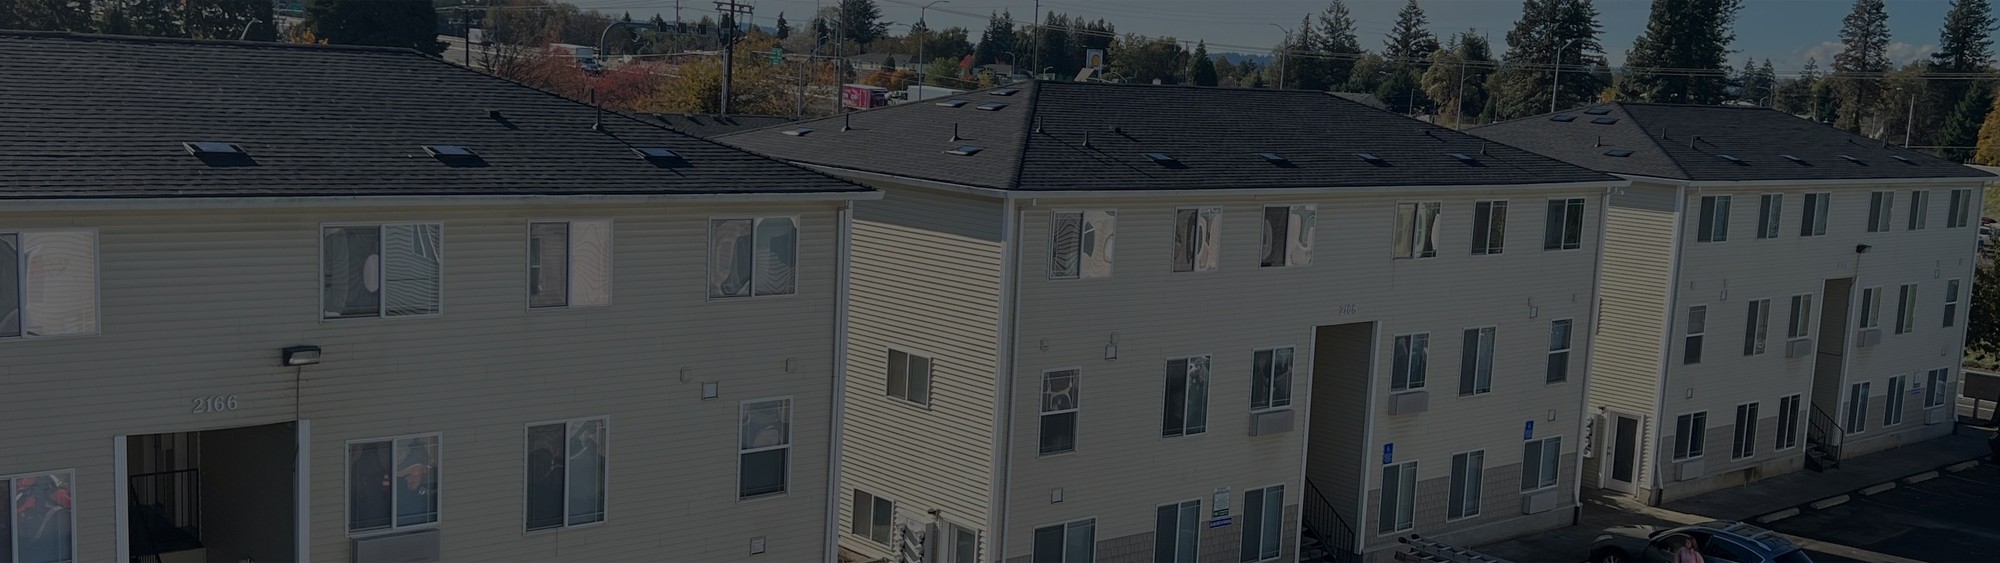 Commercial Roofing Contractors in Portland Area